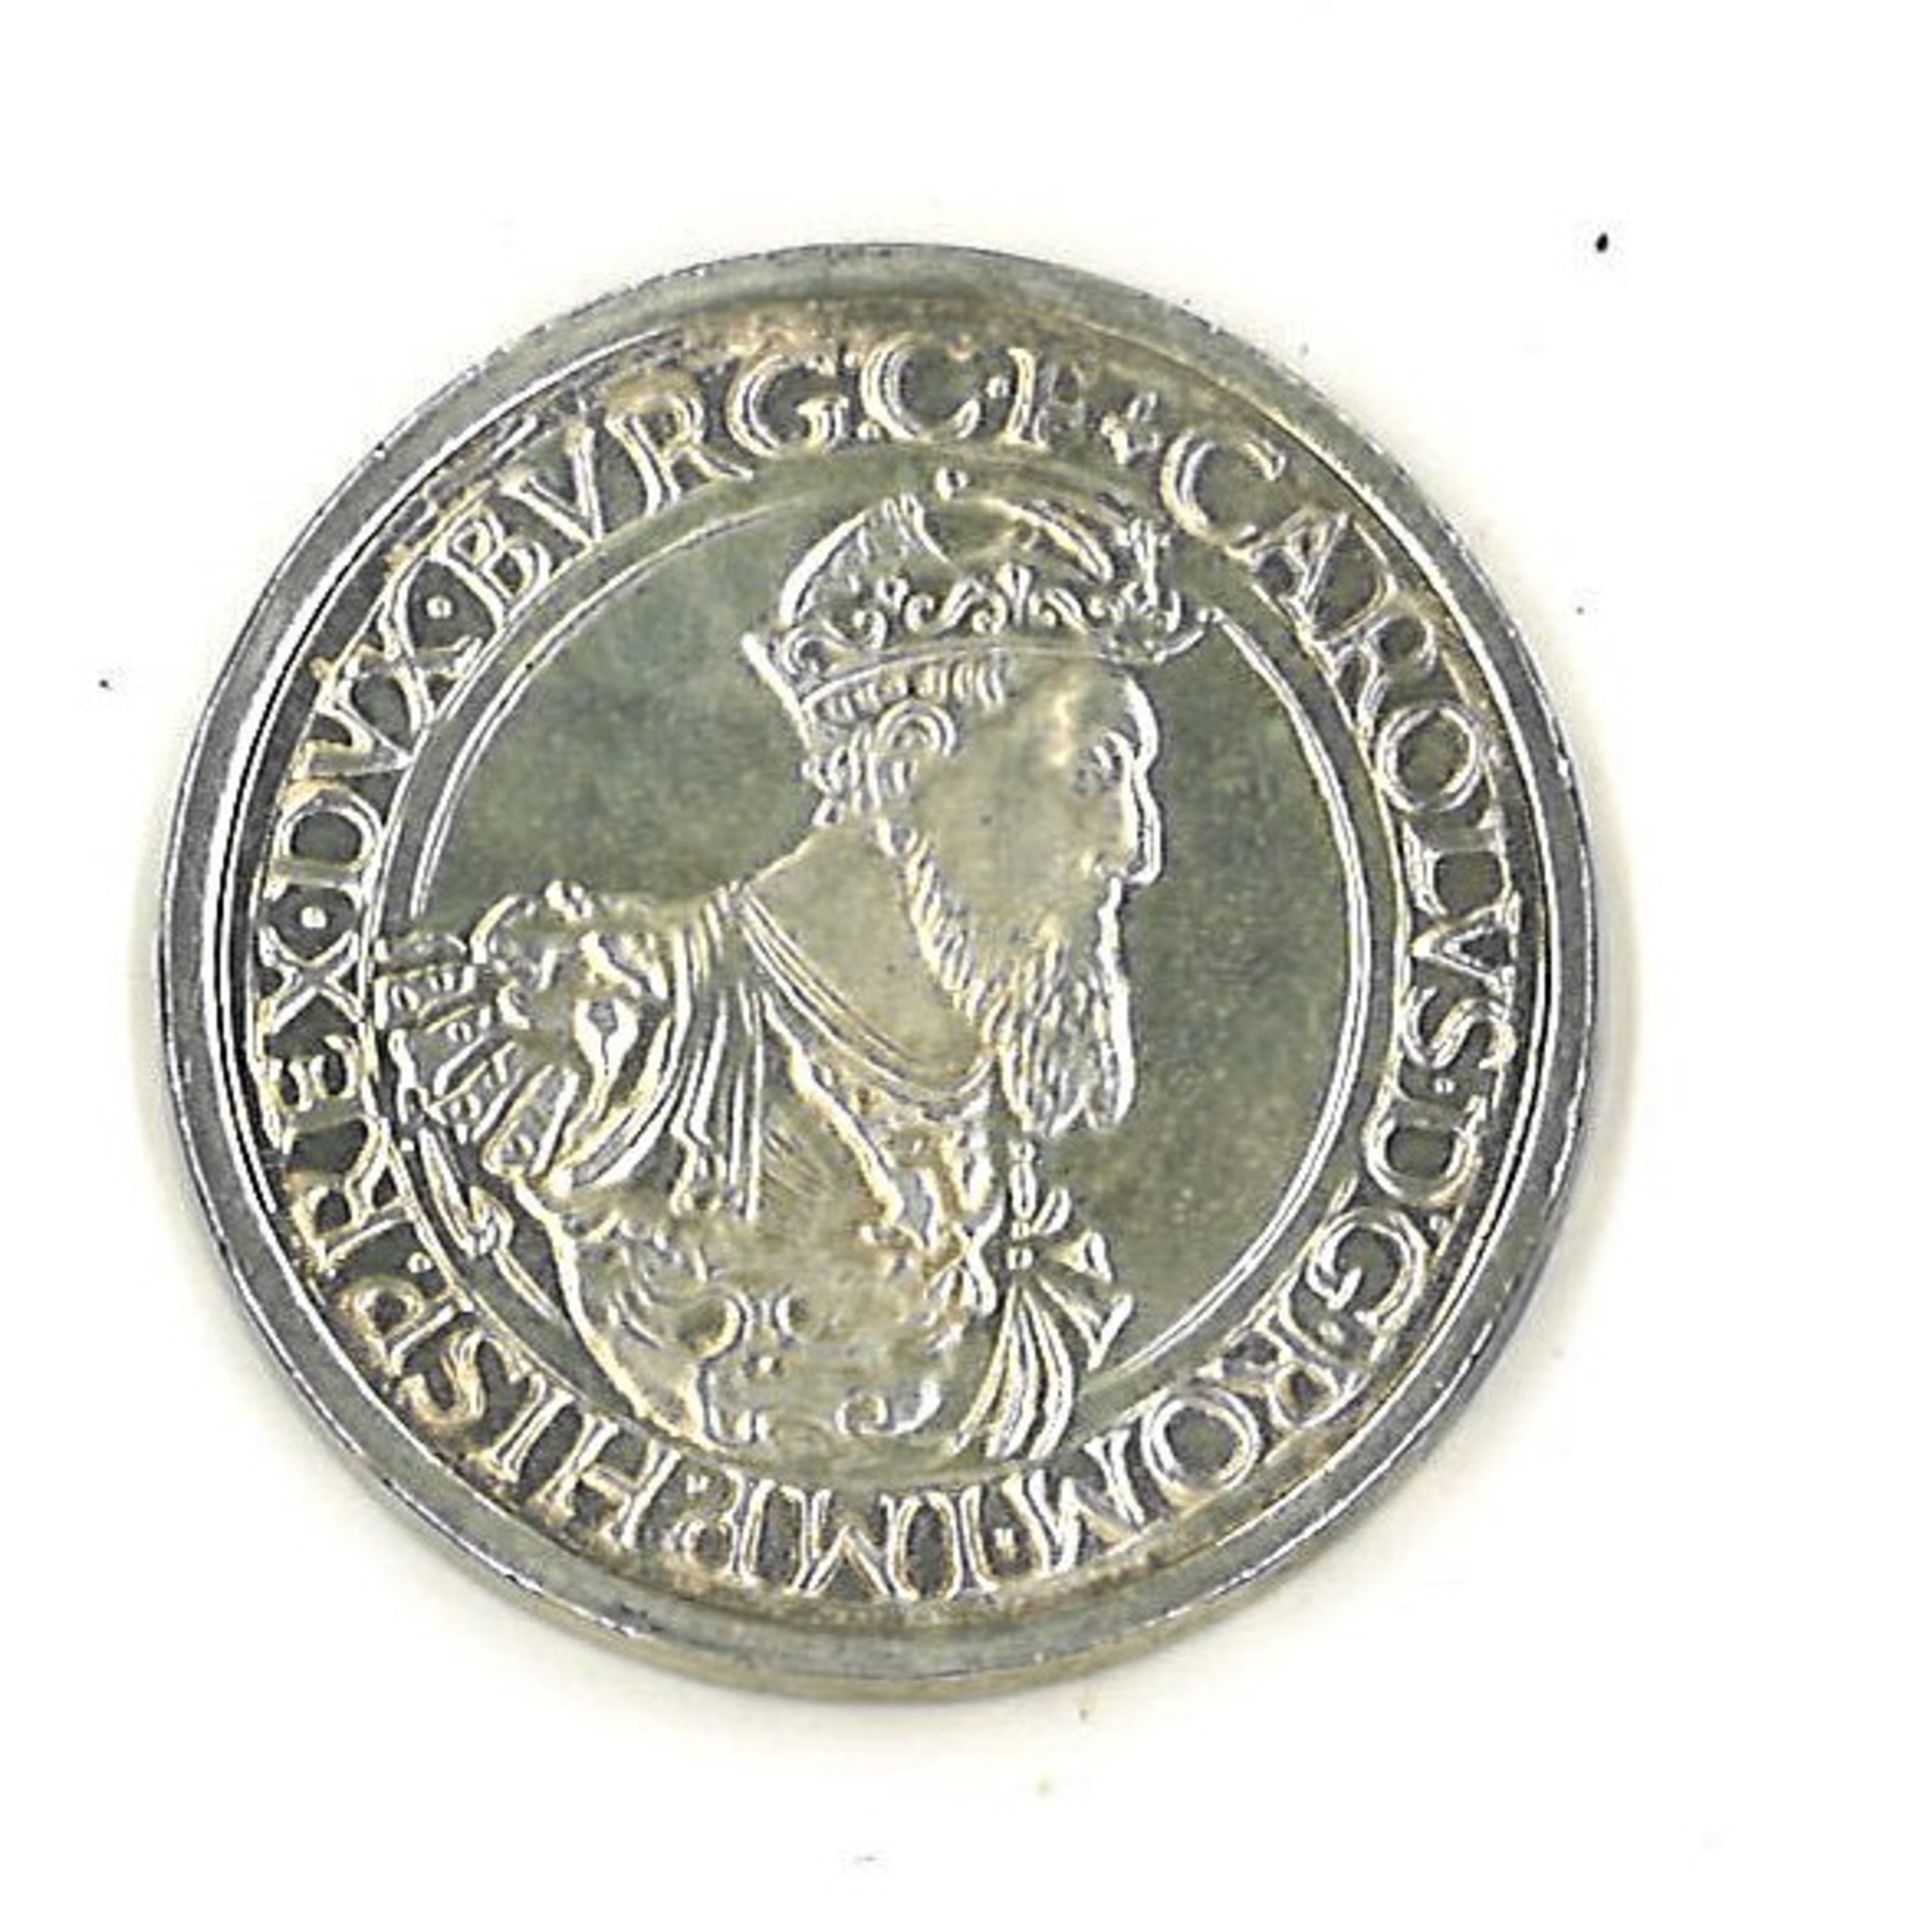 1 Silbermünze Belgien, 5 Ecu 1987 - Image 2 of 2